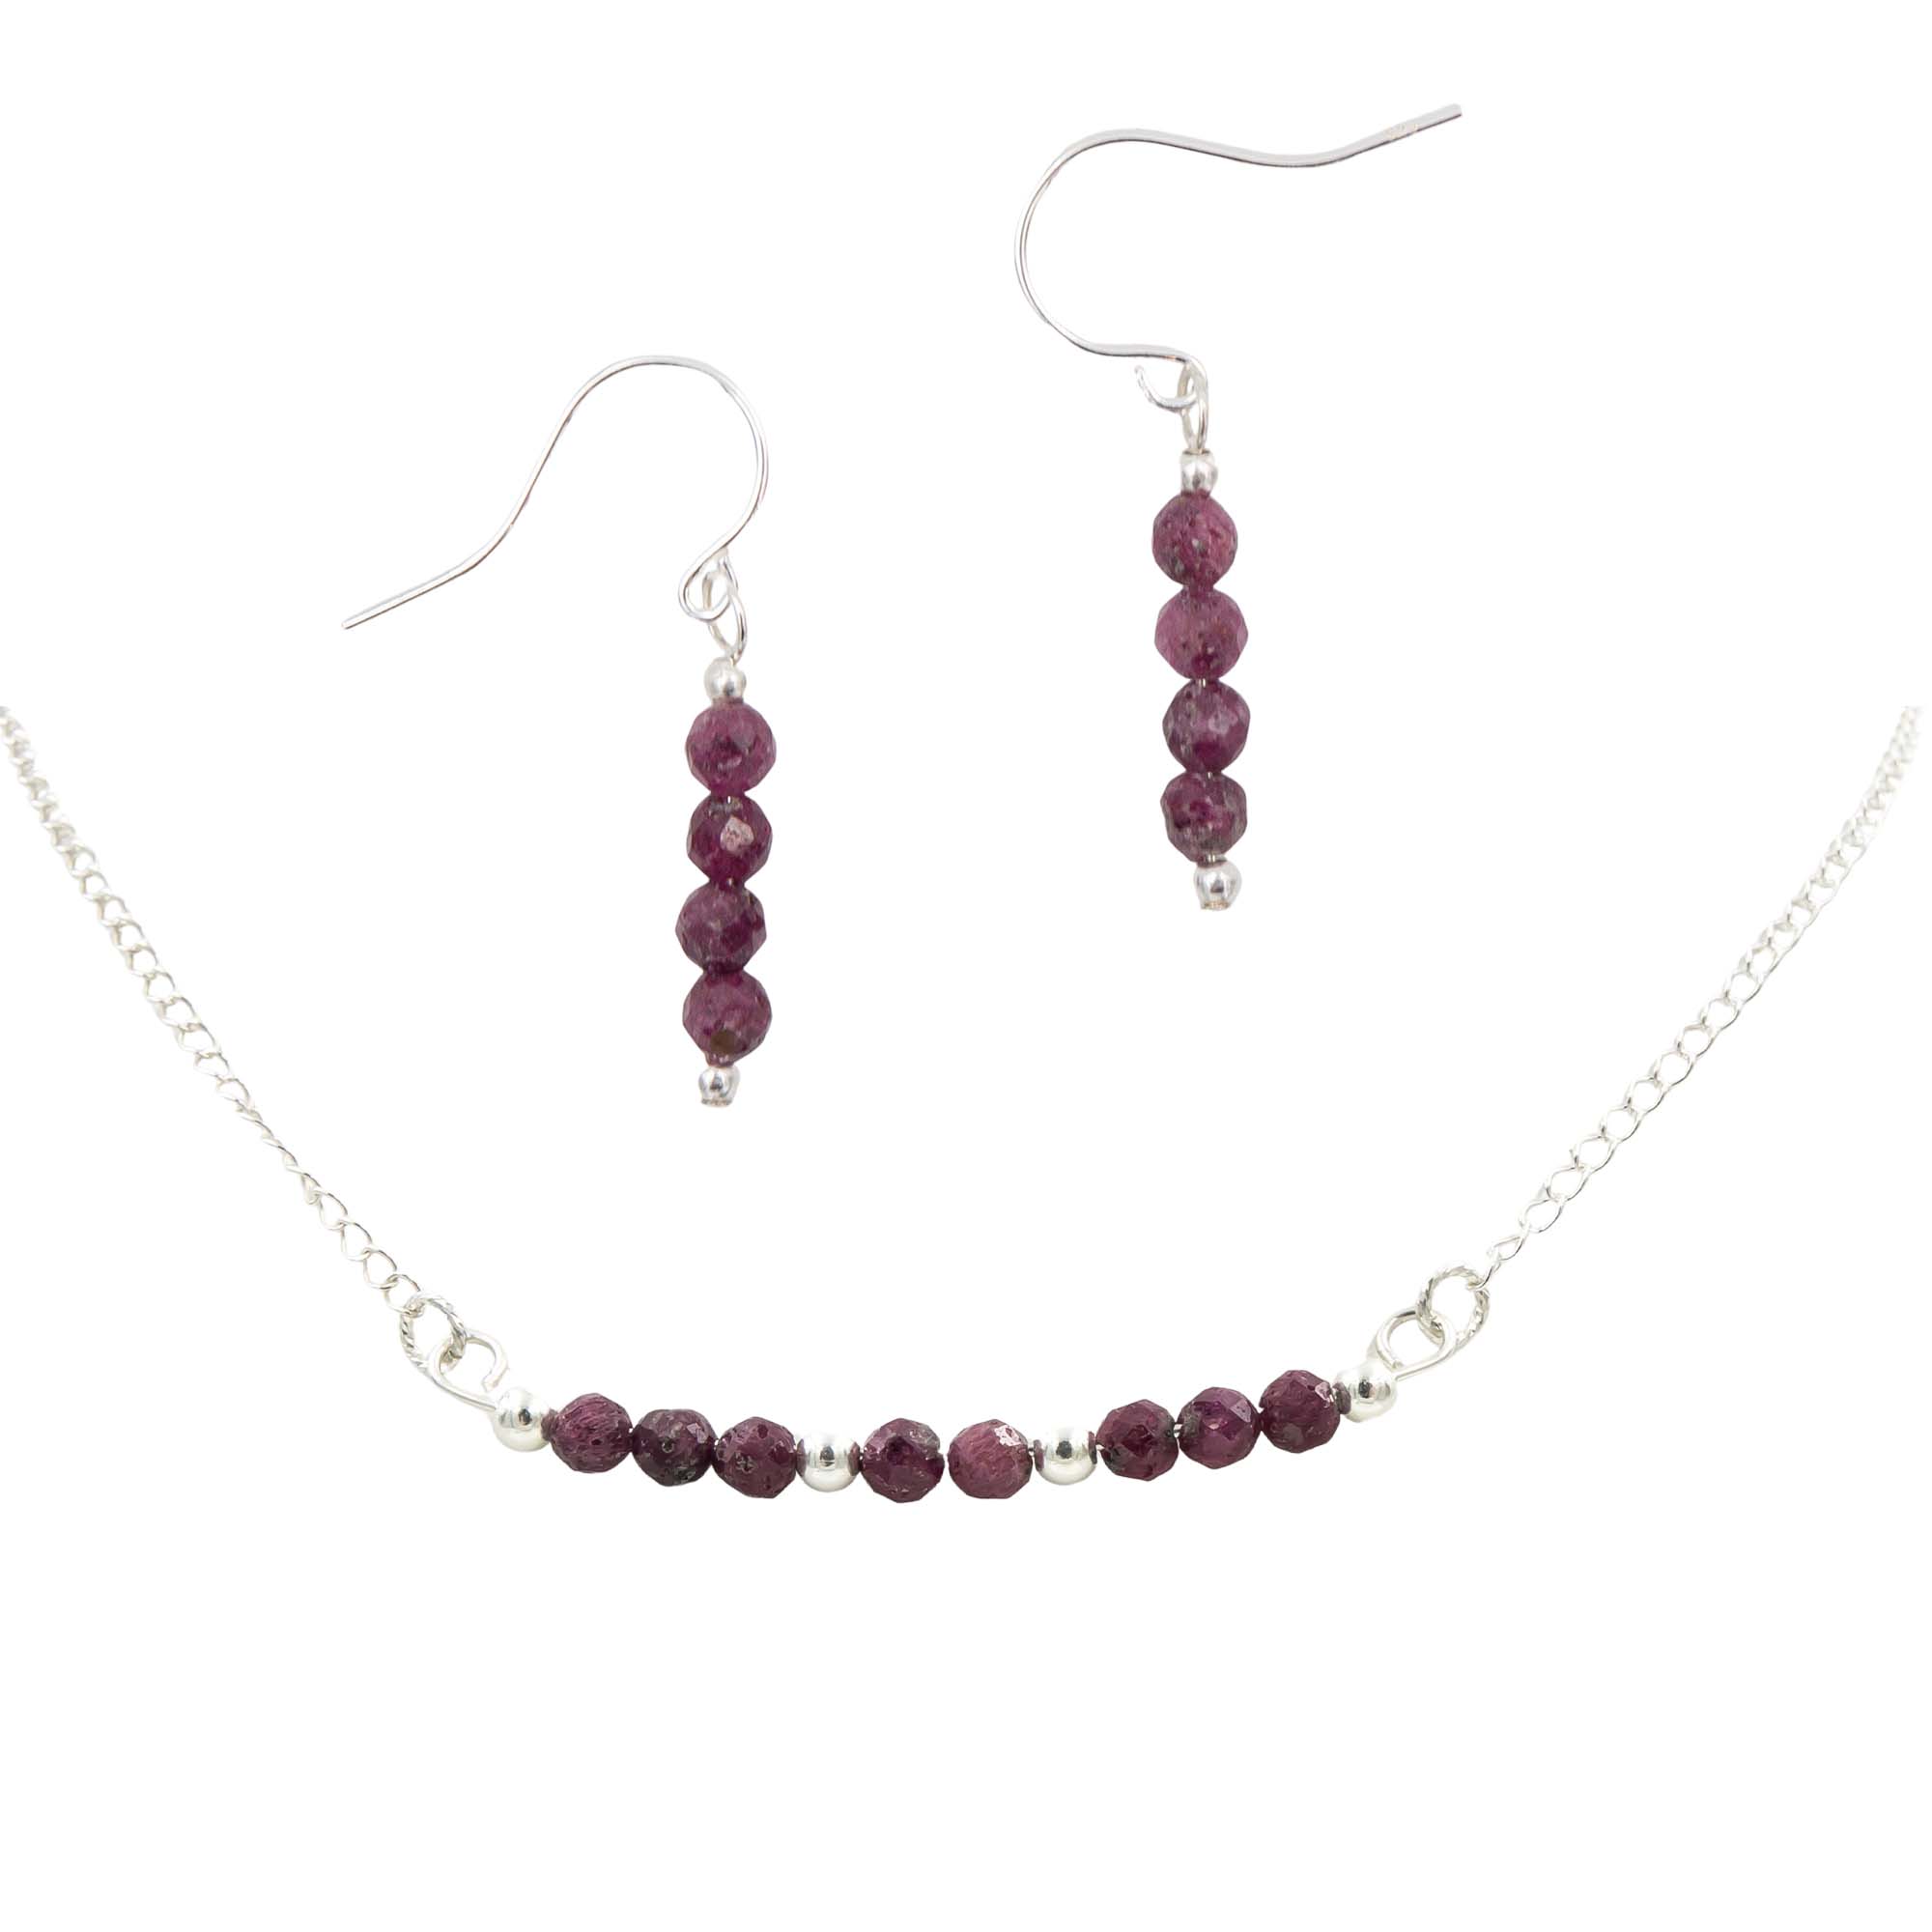 Earth Song Jewelry ~ Red Raspberries ~ Ruby Earrings ~ Handmade Sterling Silver Earrings & Necklace Set